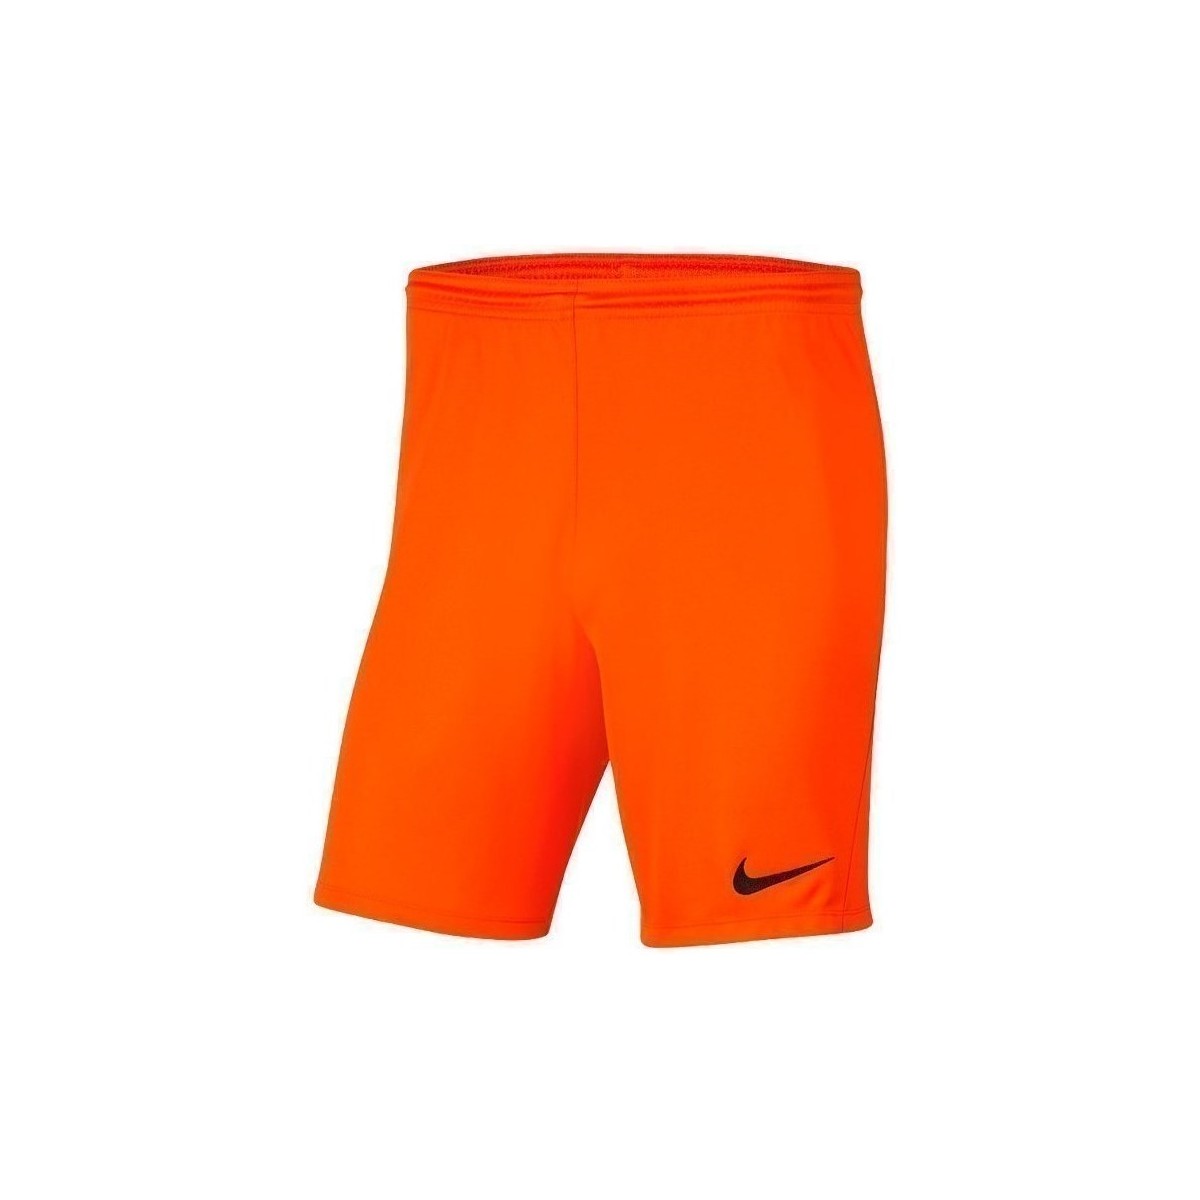 Vêtements Homme Pantacourts Nike Dry Park Iii Orange